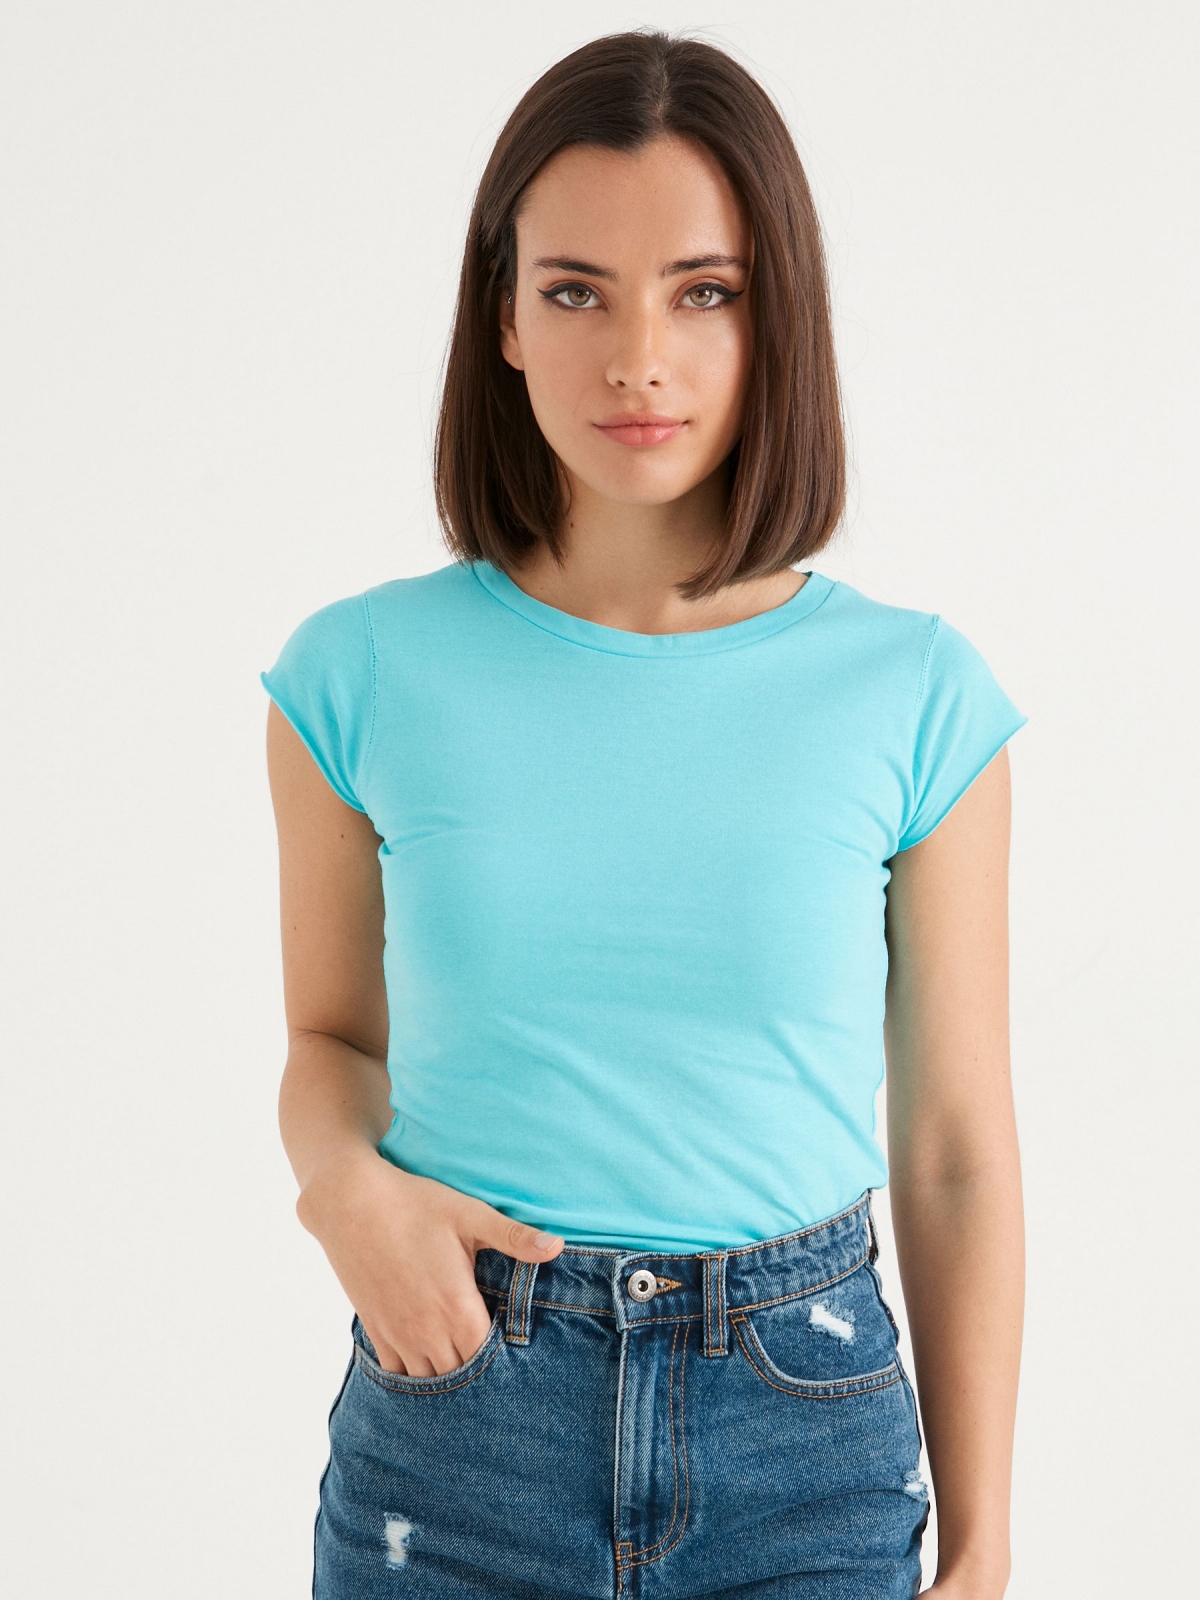 T-shirt básica de gola redonda azul claro vista meia frontal